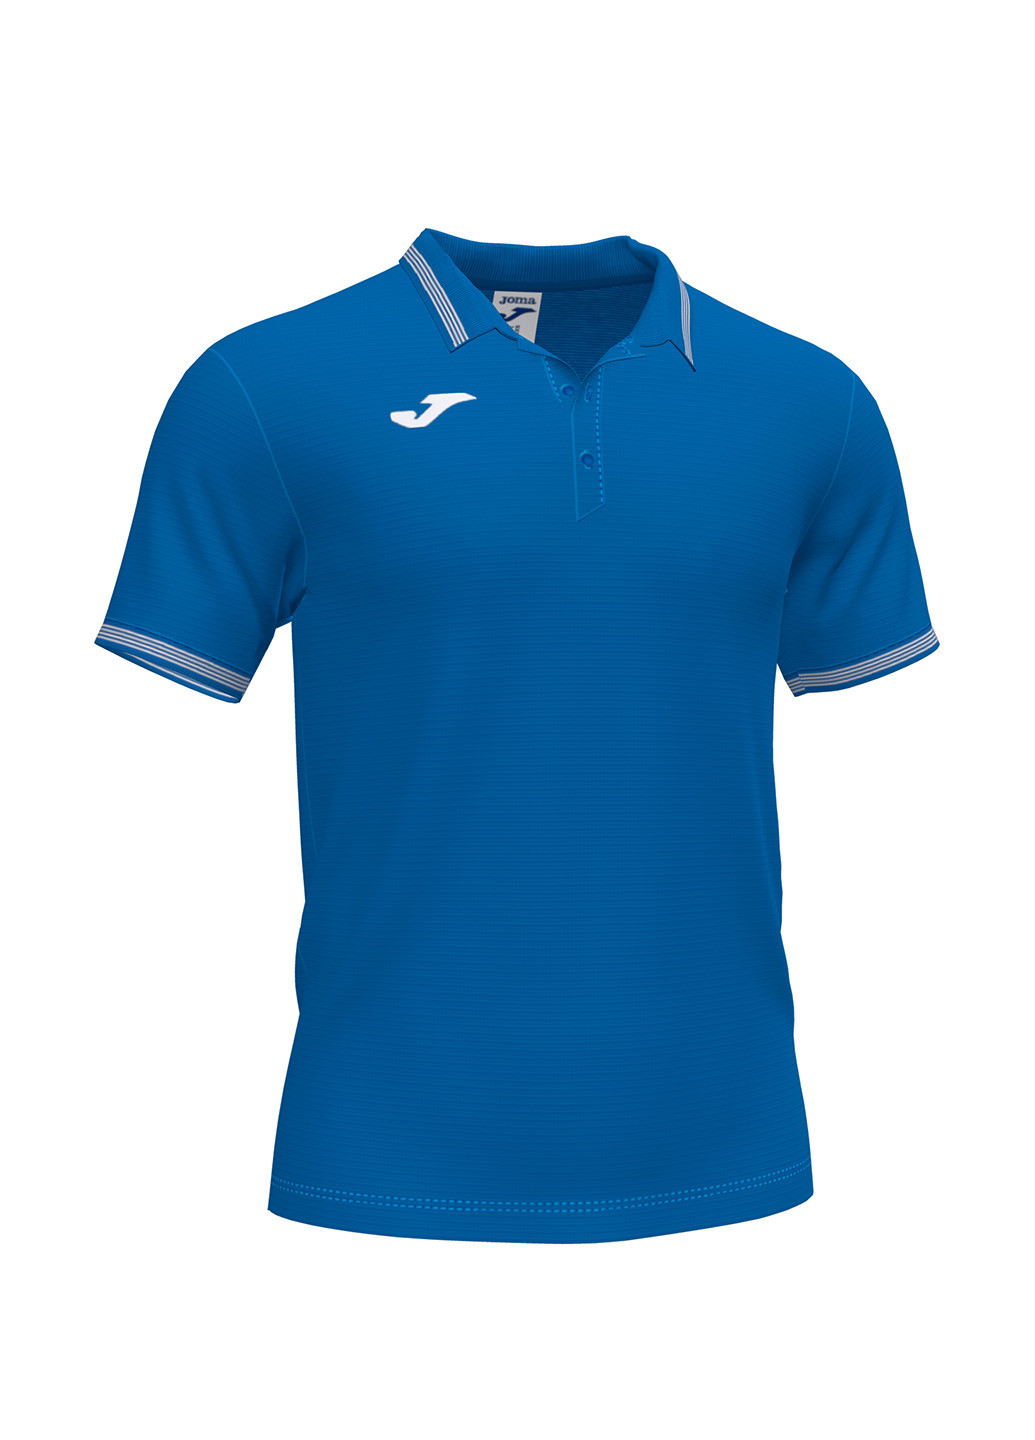 Синяя футболка-поло для мужчин Joma с логотипом